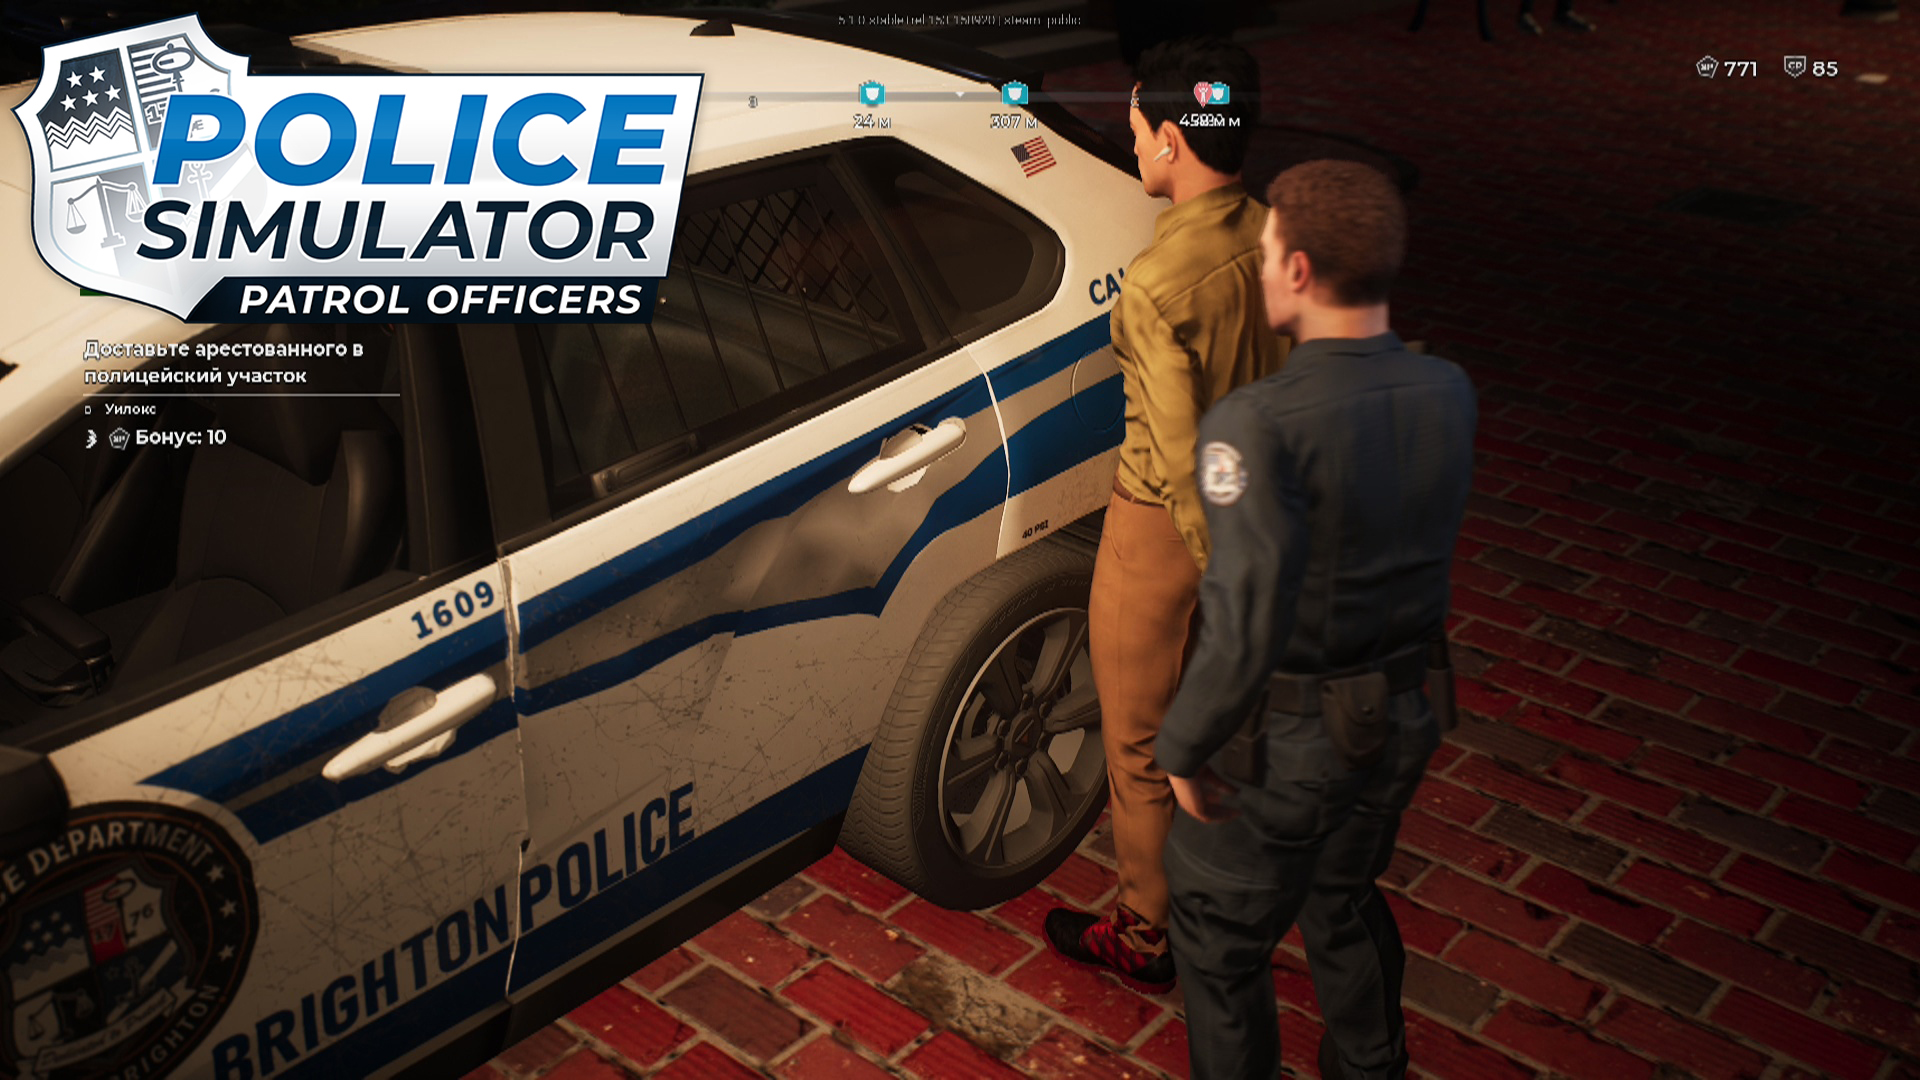 Police simulator patrol officers стим фото 87